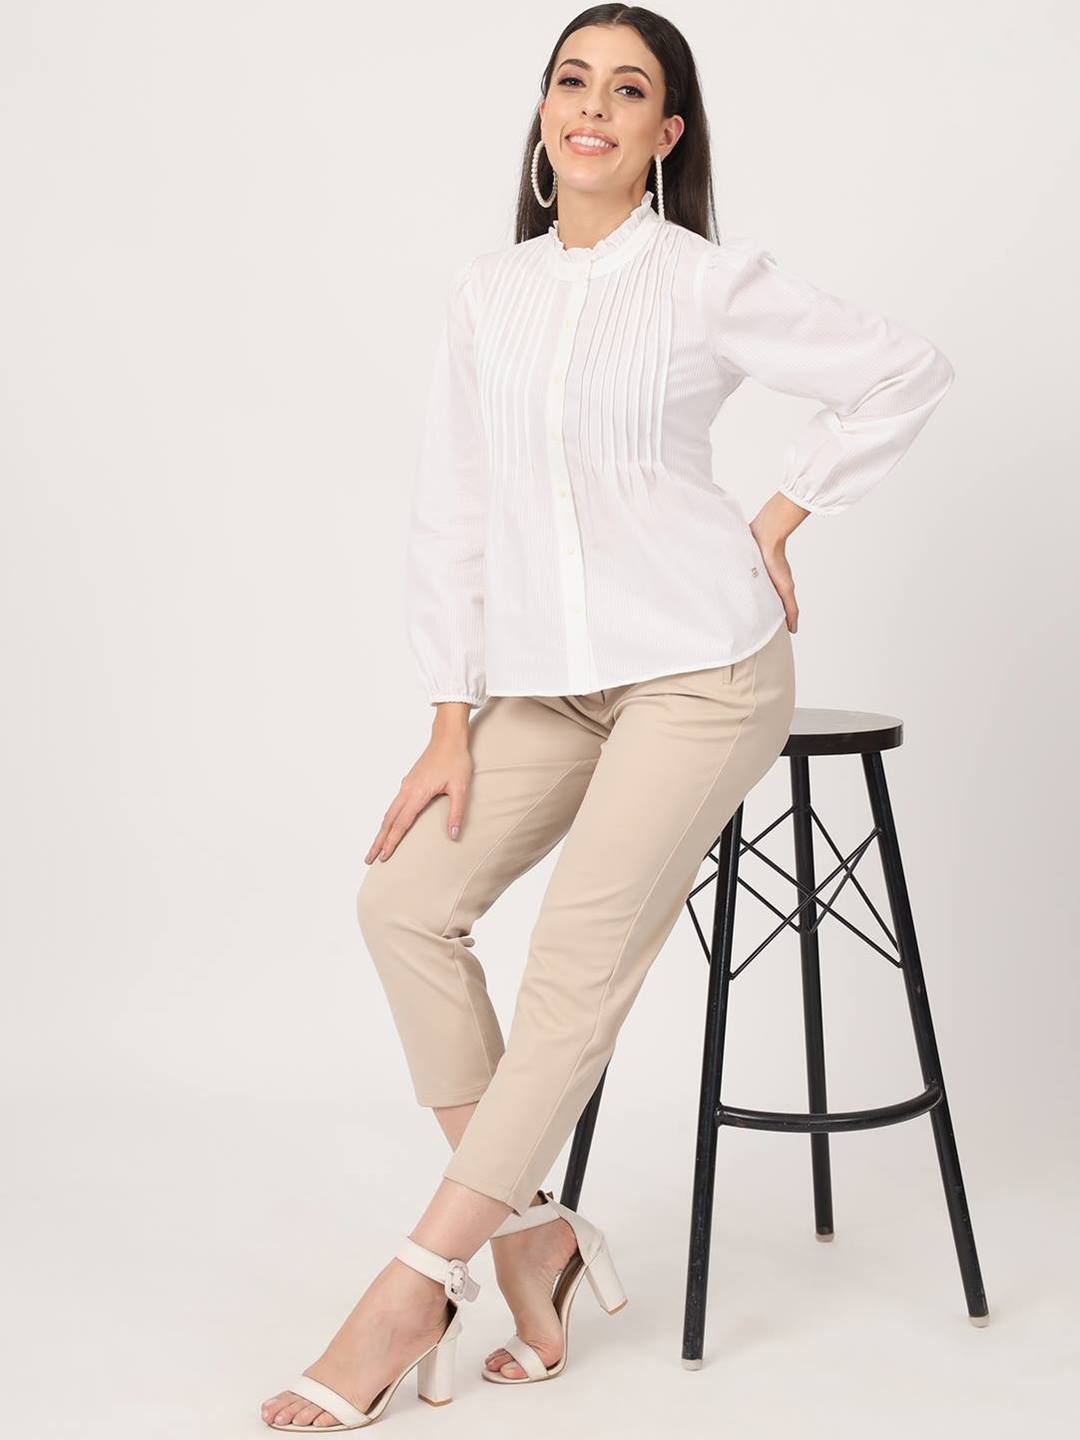 White Collar Shirt Women - Buy White Collar Shirt Women online in India